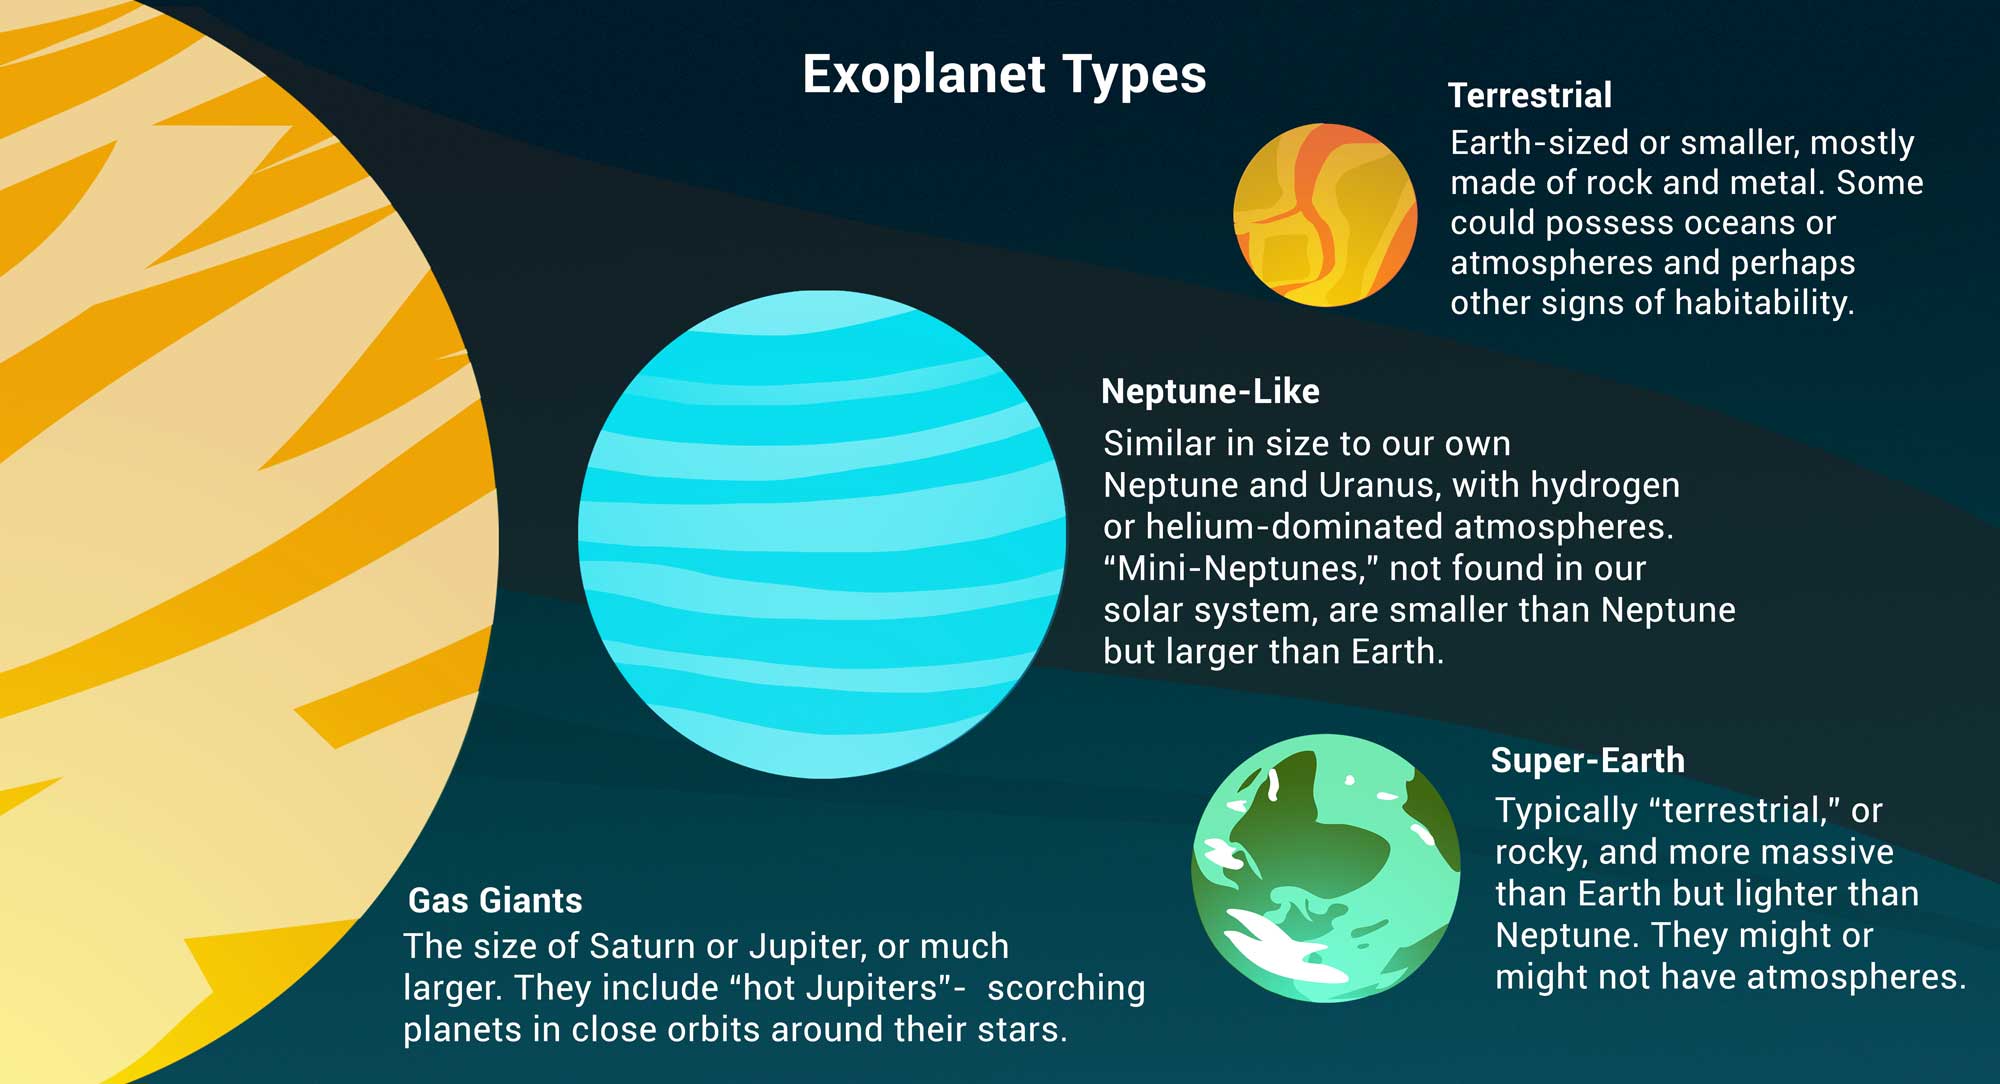 Exoplanet Types